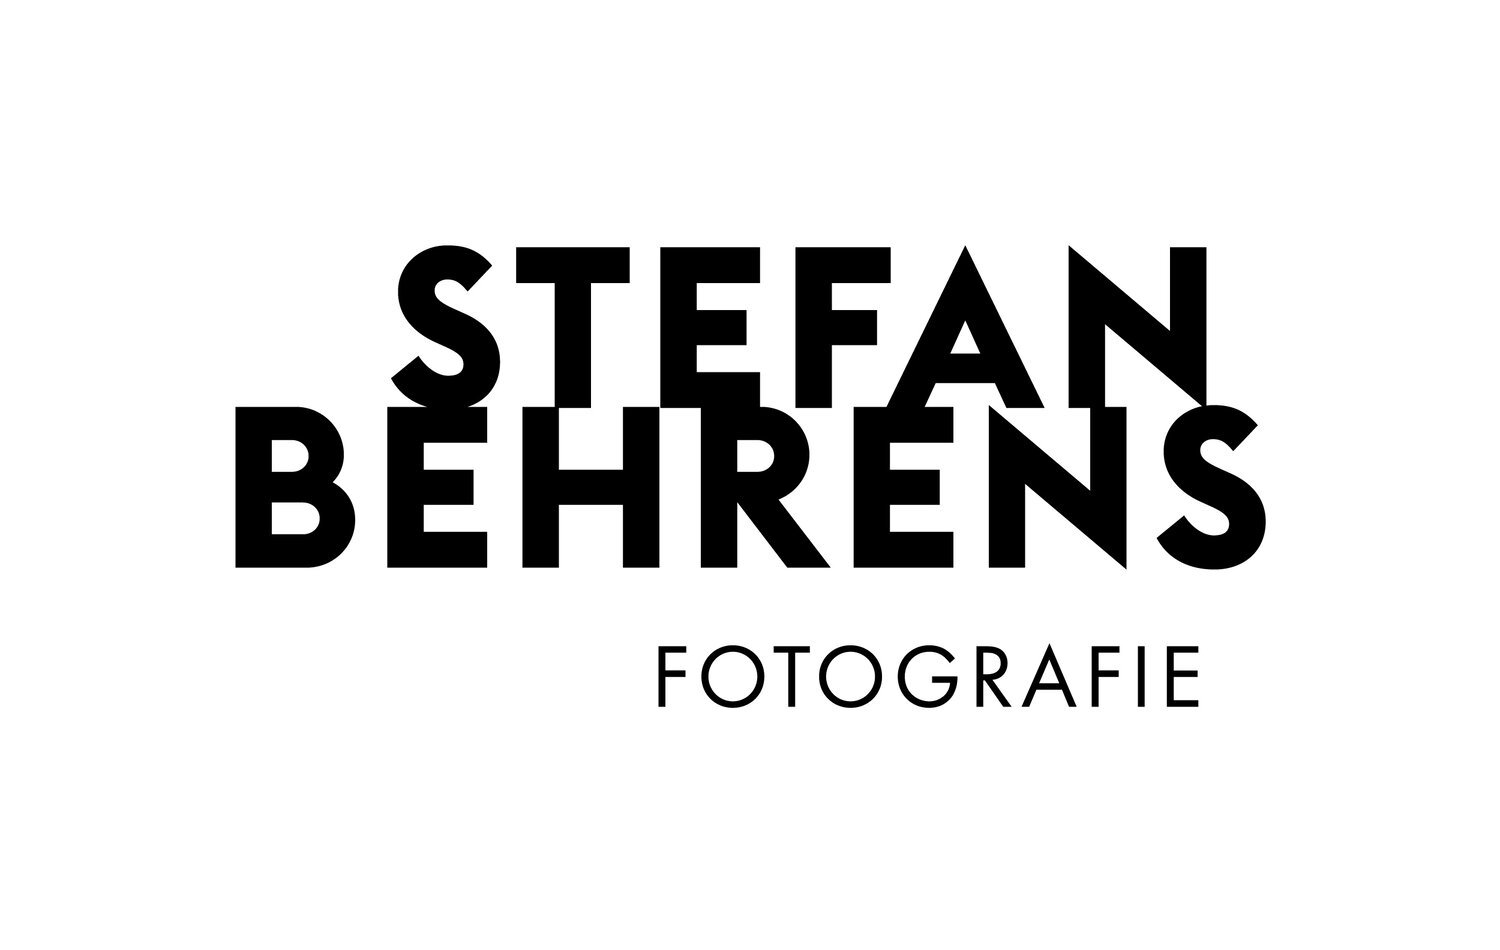 (c) Stefan-behrens.com